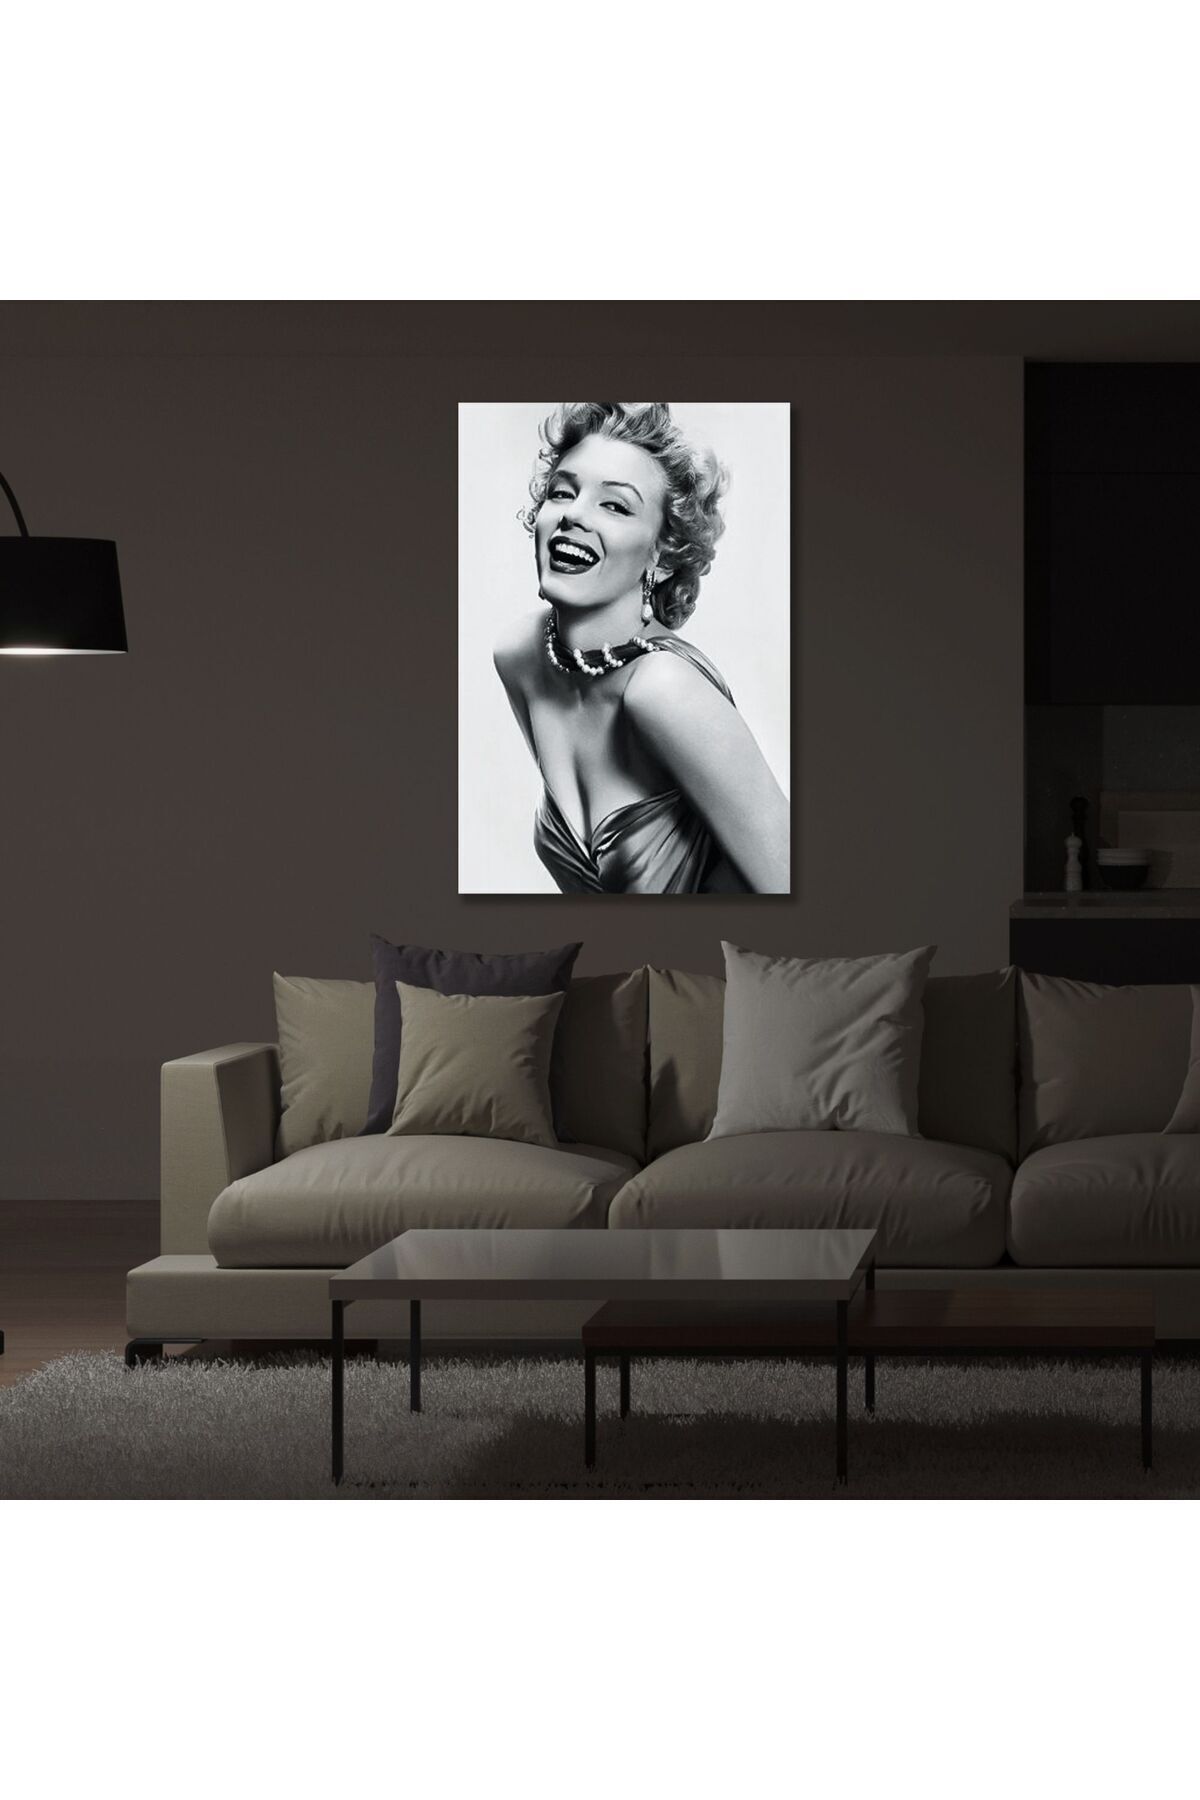 GAAGART Tekli Dikey Kanvas Duvar Tablosu Ünlü Aktör Marilyn Monroe